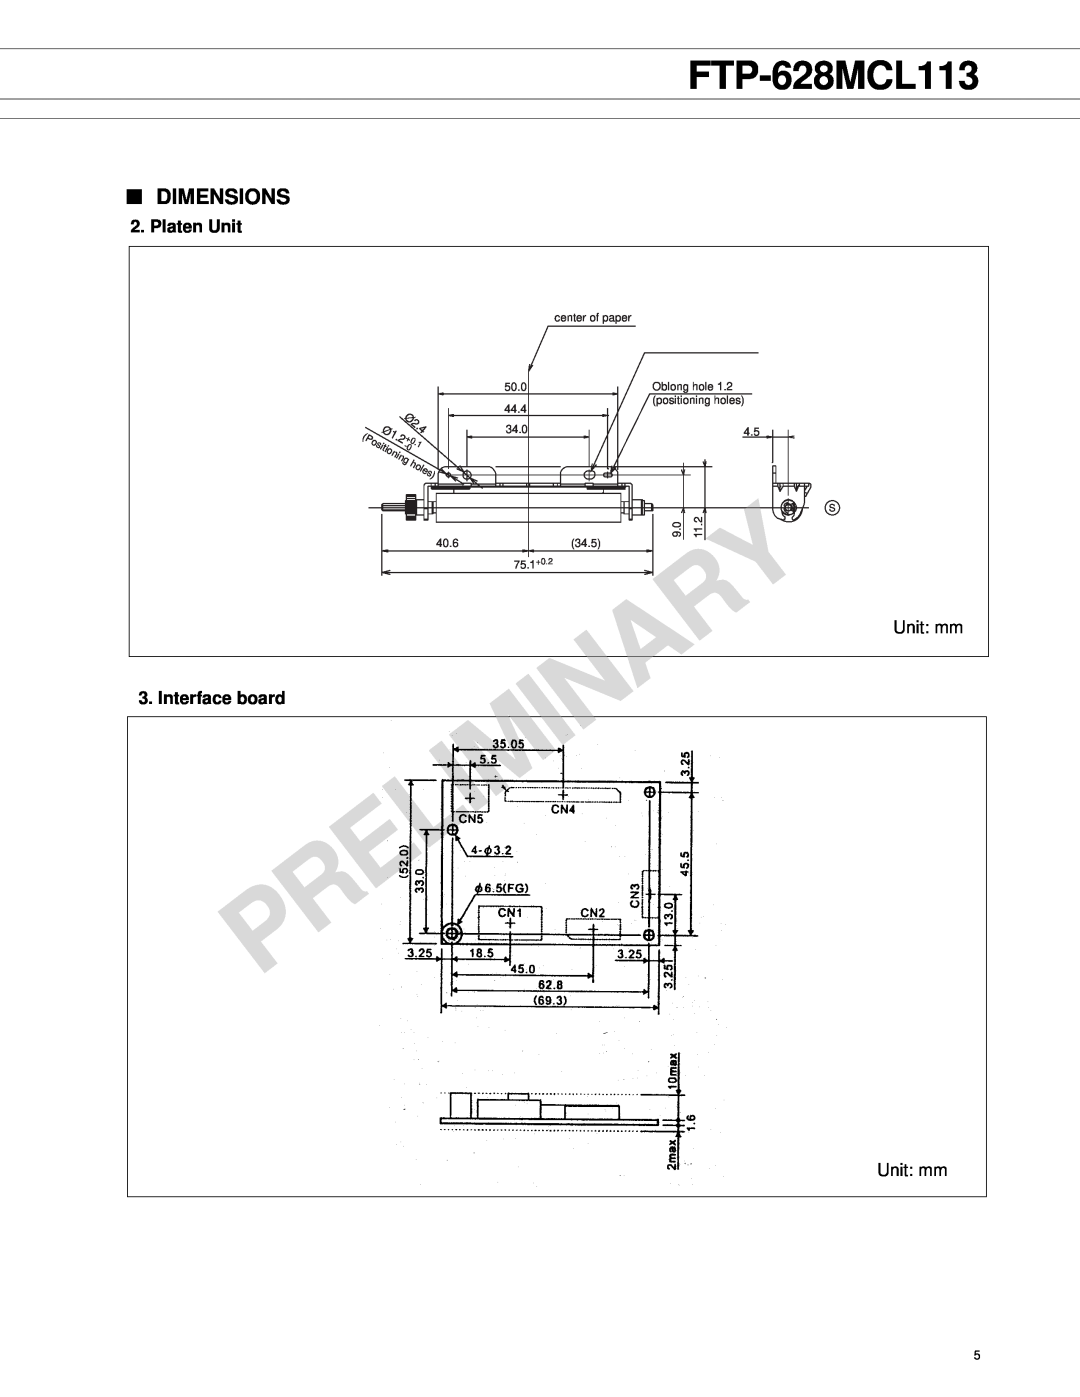 Fujitsu FTP-628MCL113 manual Platen Unit, Interface board, Preliminary, Dimensions, 34.0, ng h, 11.2, 40.6, 34.5, Unit mm 